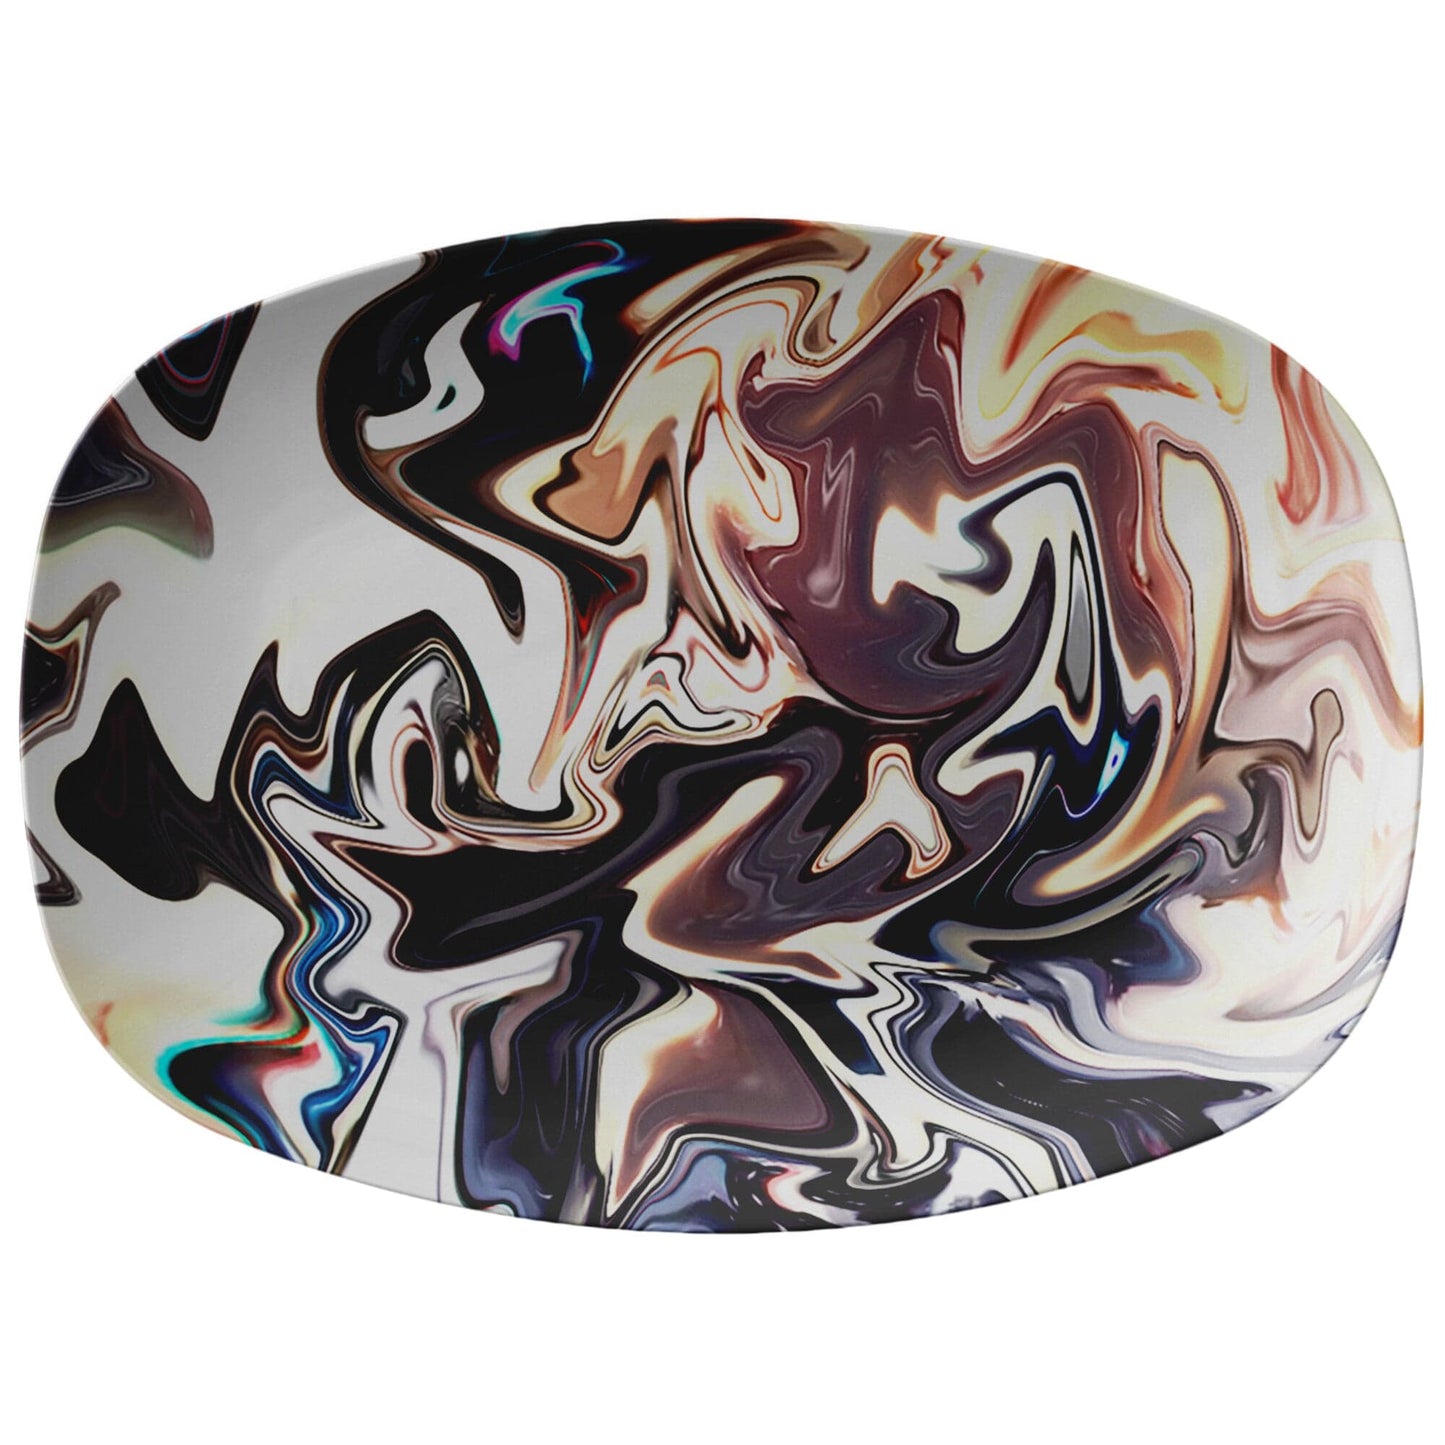 Kate McEnroe New York Serving Platter in Abstract Liquid Marble Print Serving Platters 9727